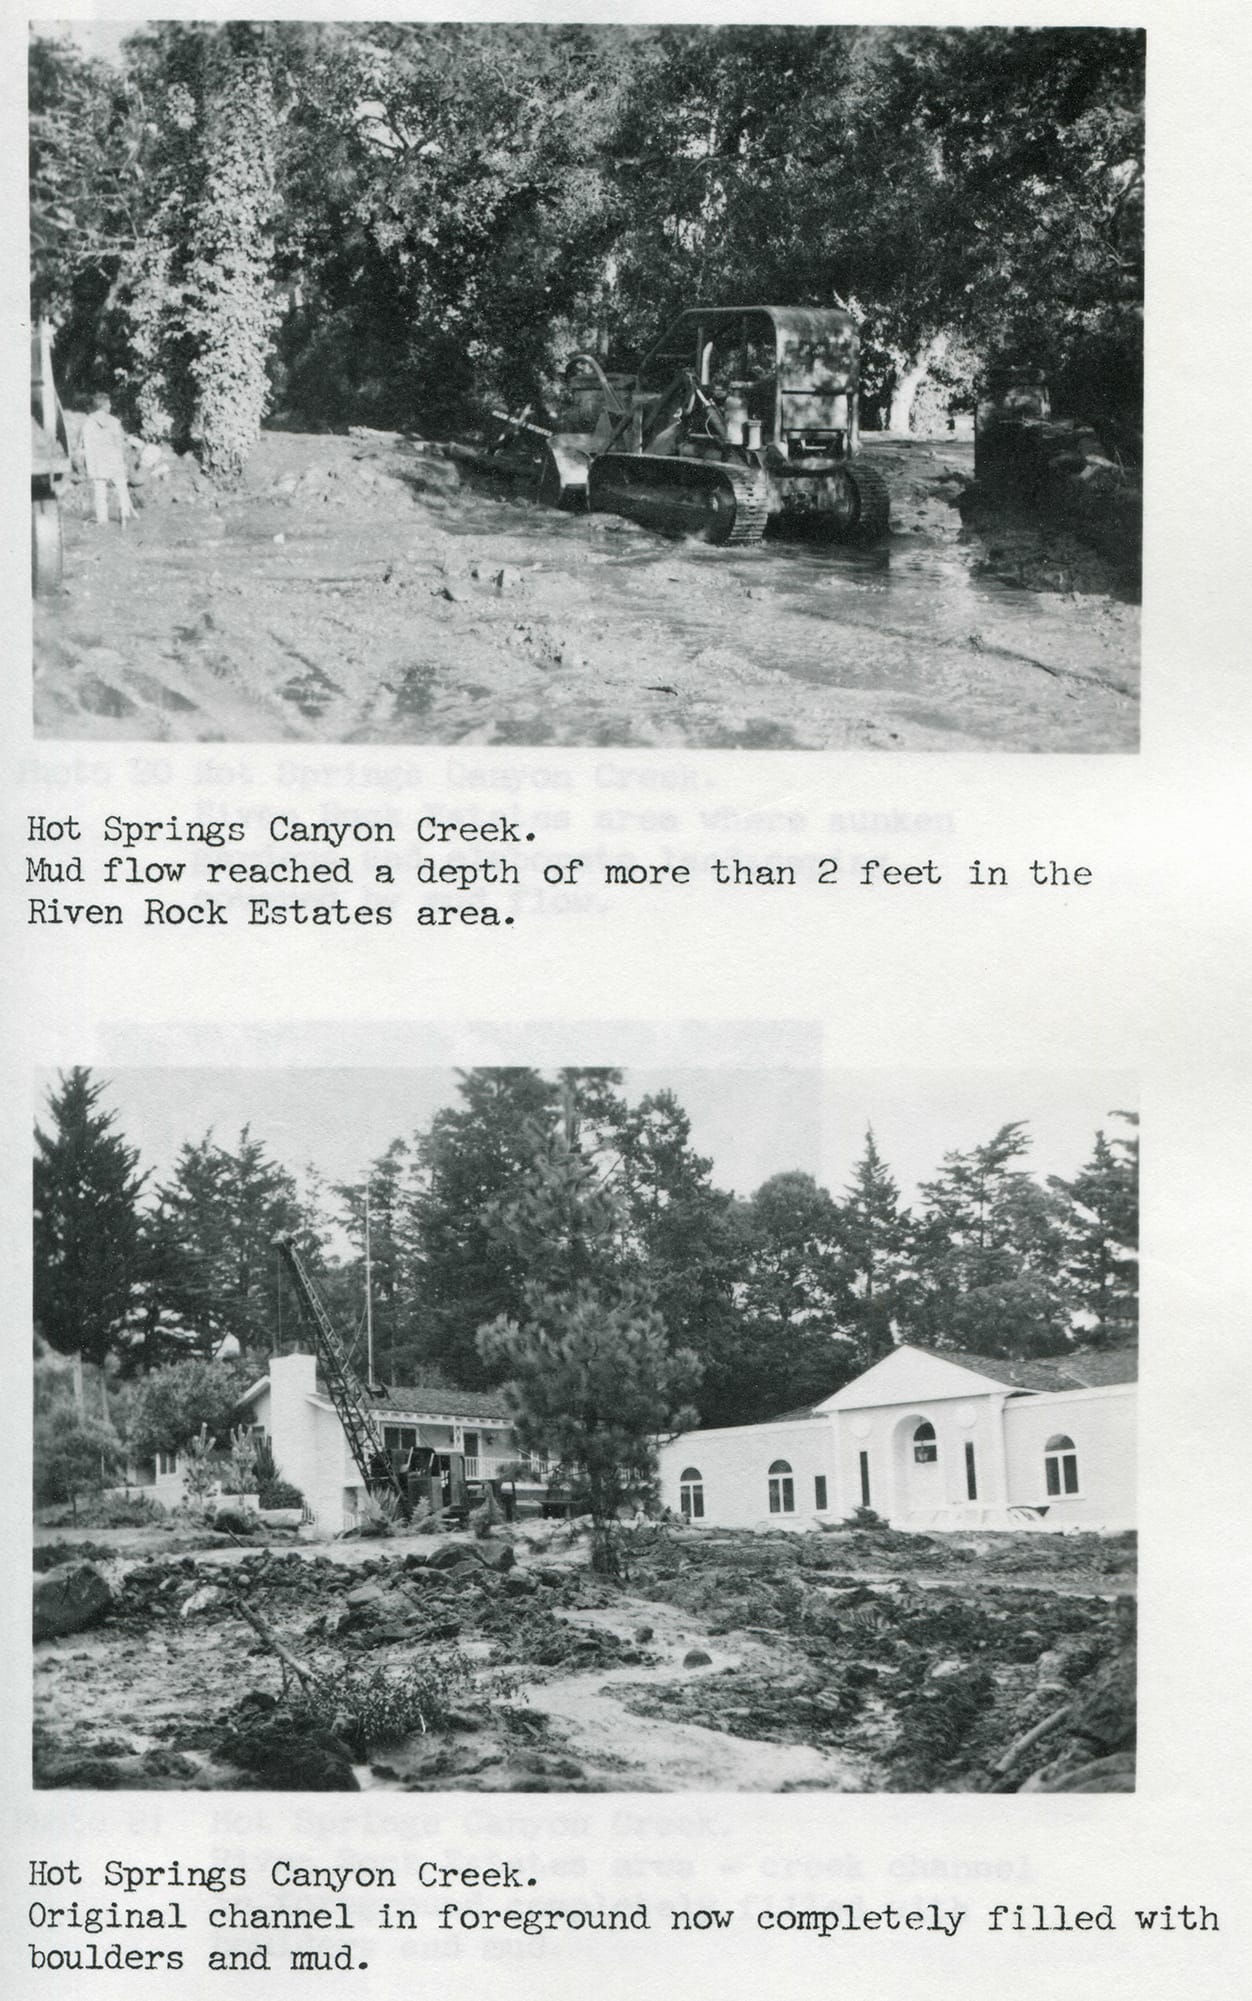 1964 Coyote Fire debris flow